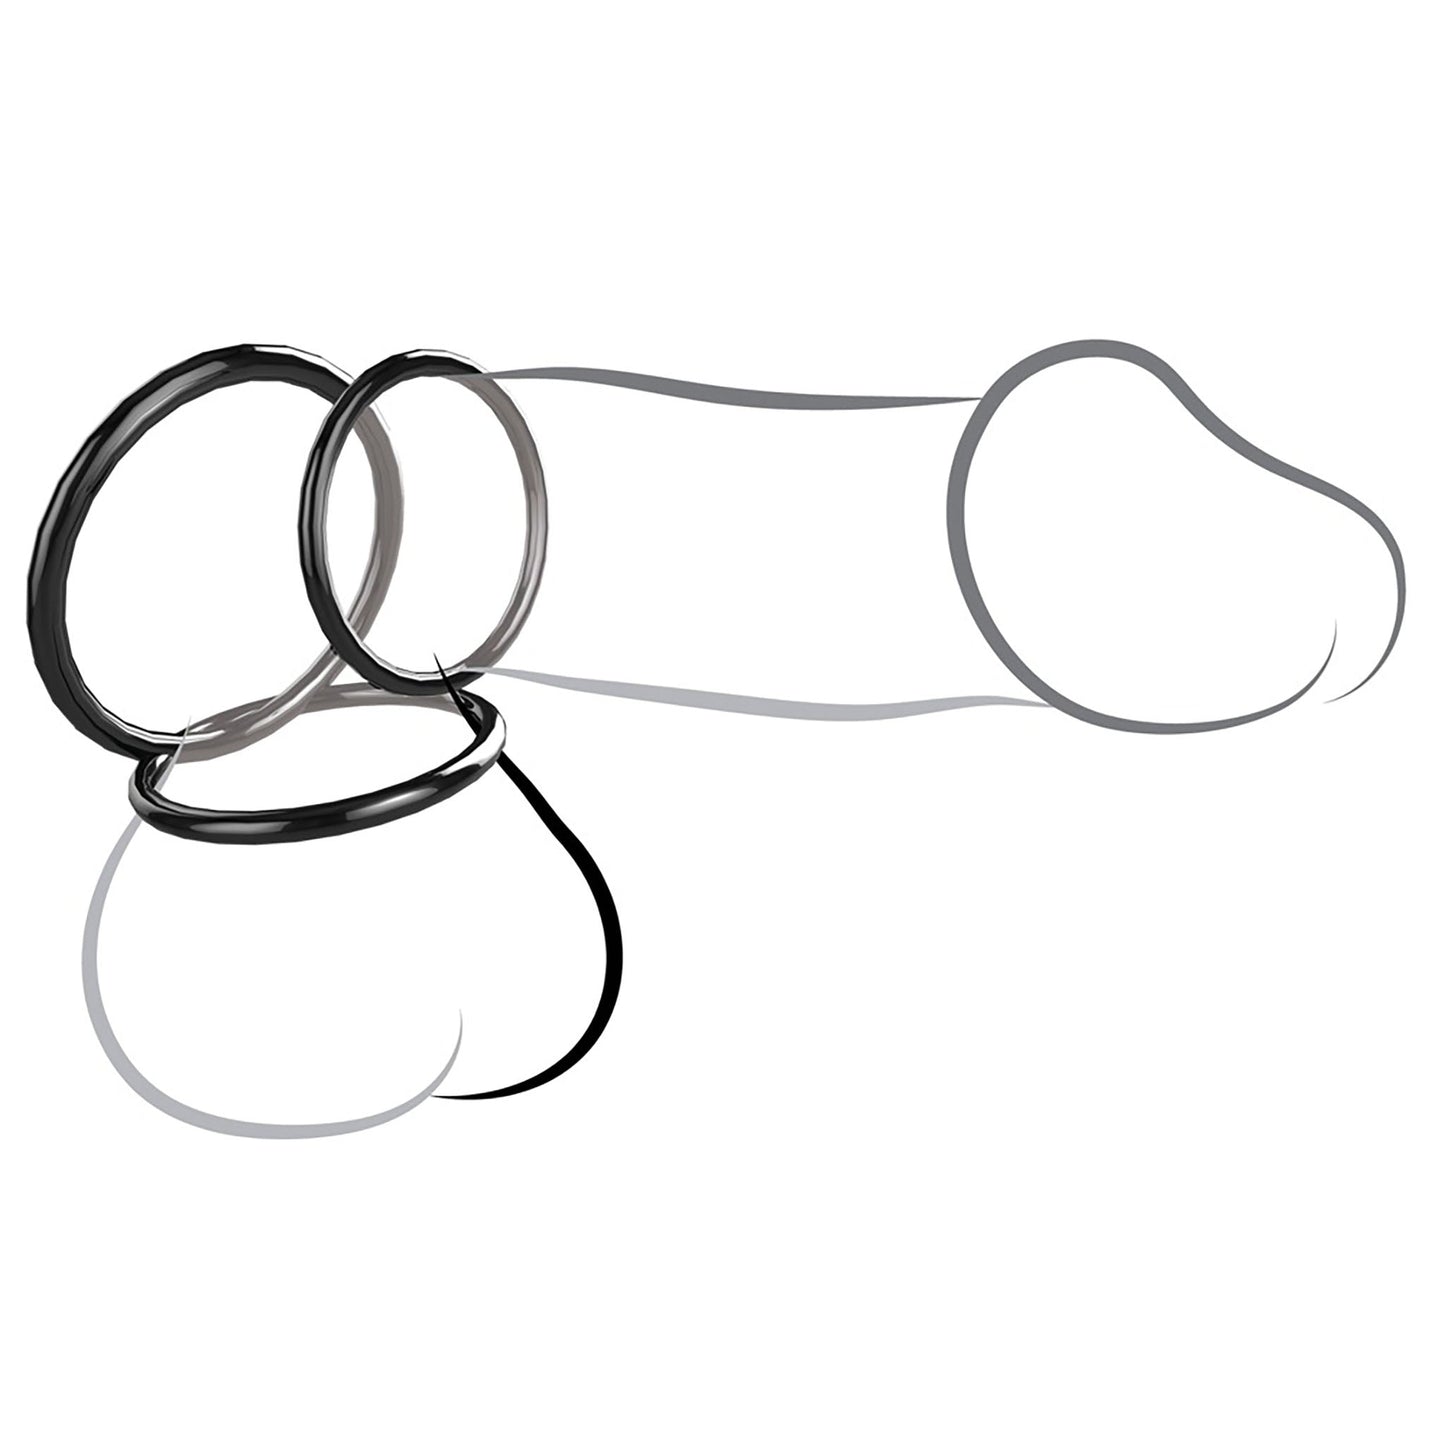 Silicone 3 Ring Stamina Set, schwarze Penisringe aus Silikon getragen